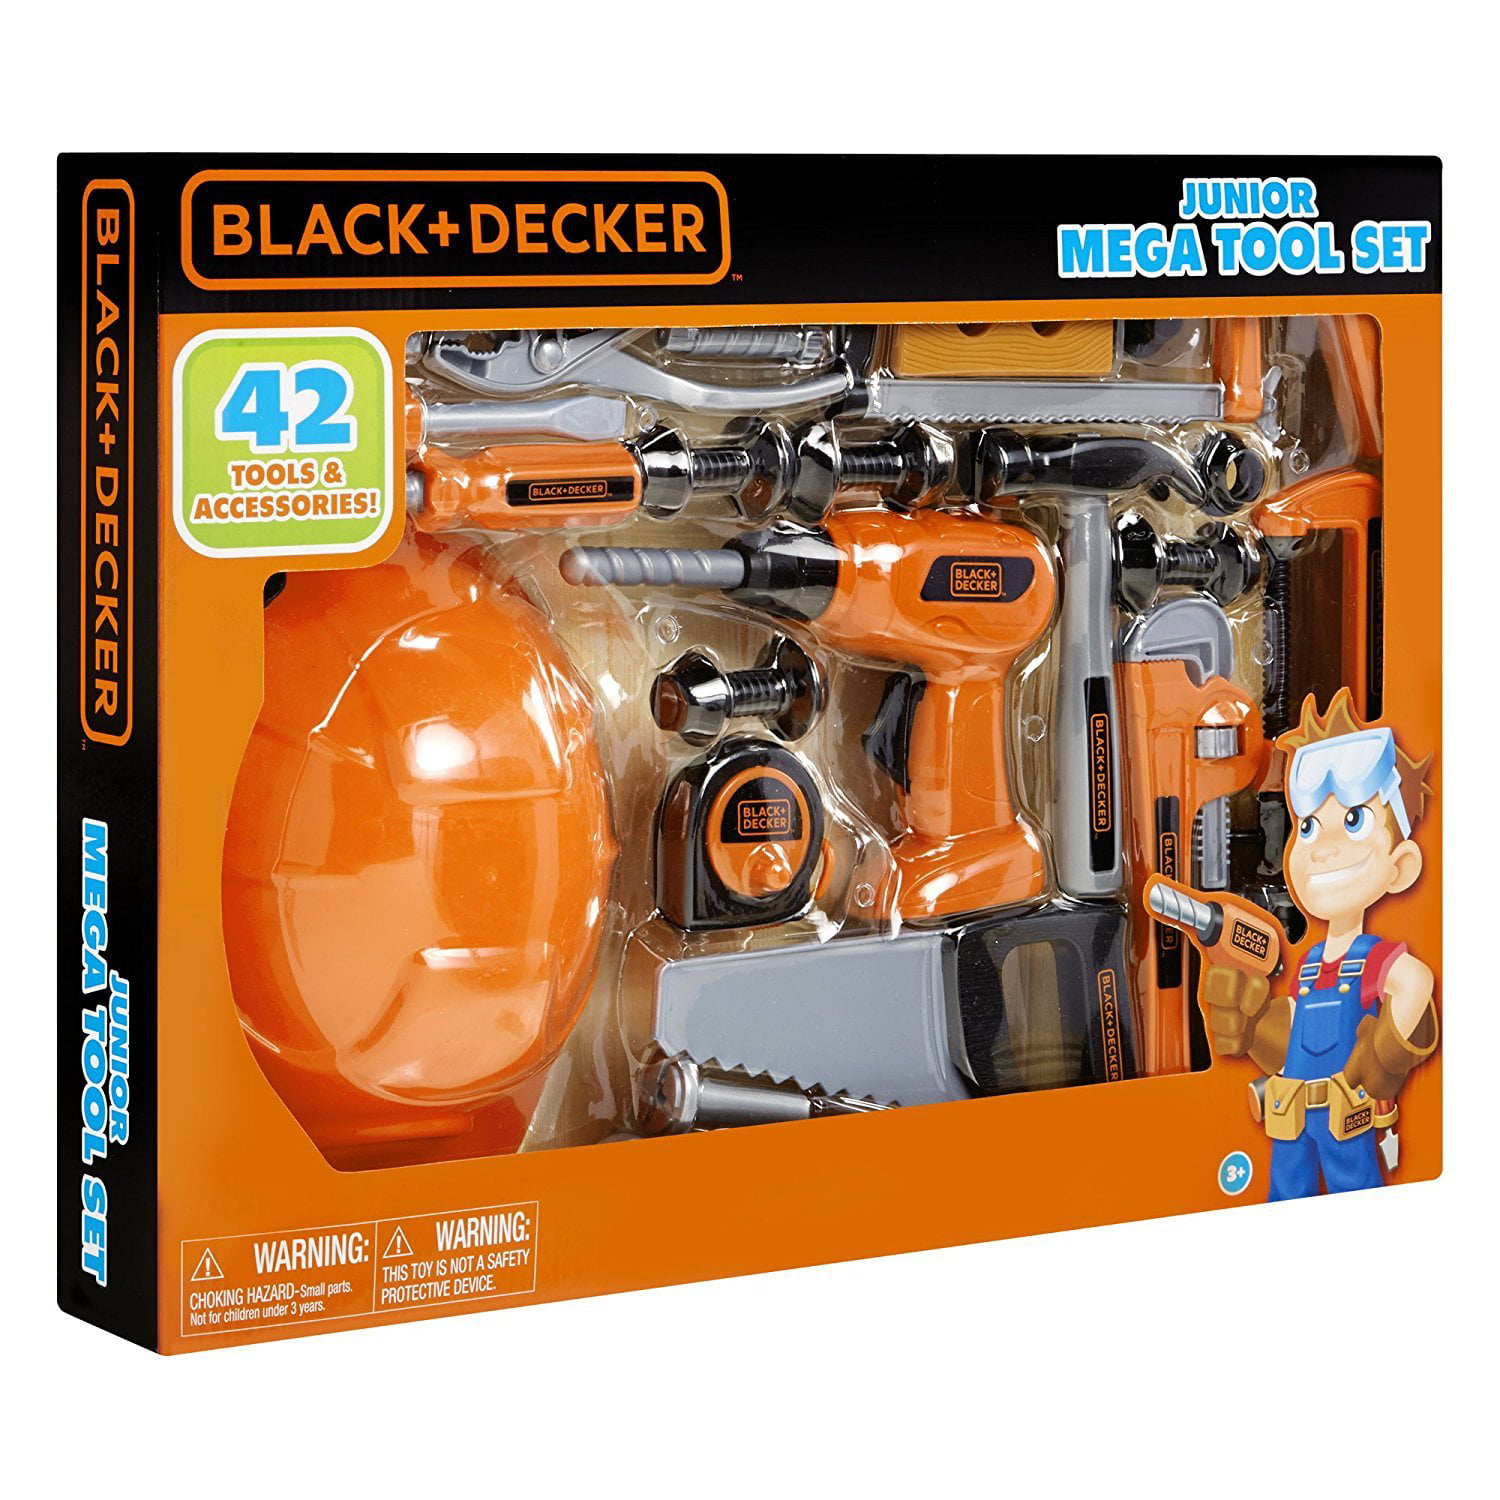 Black & Decker 55520 Junior Deluxe 80 Pc Tool Set 